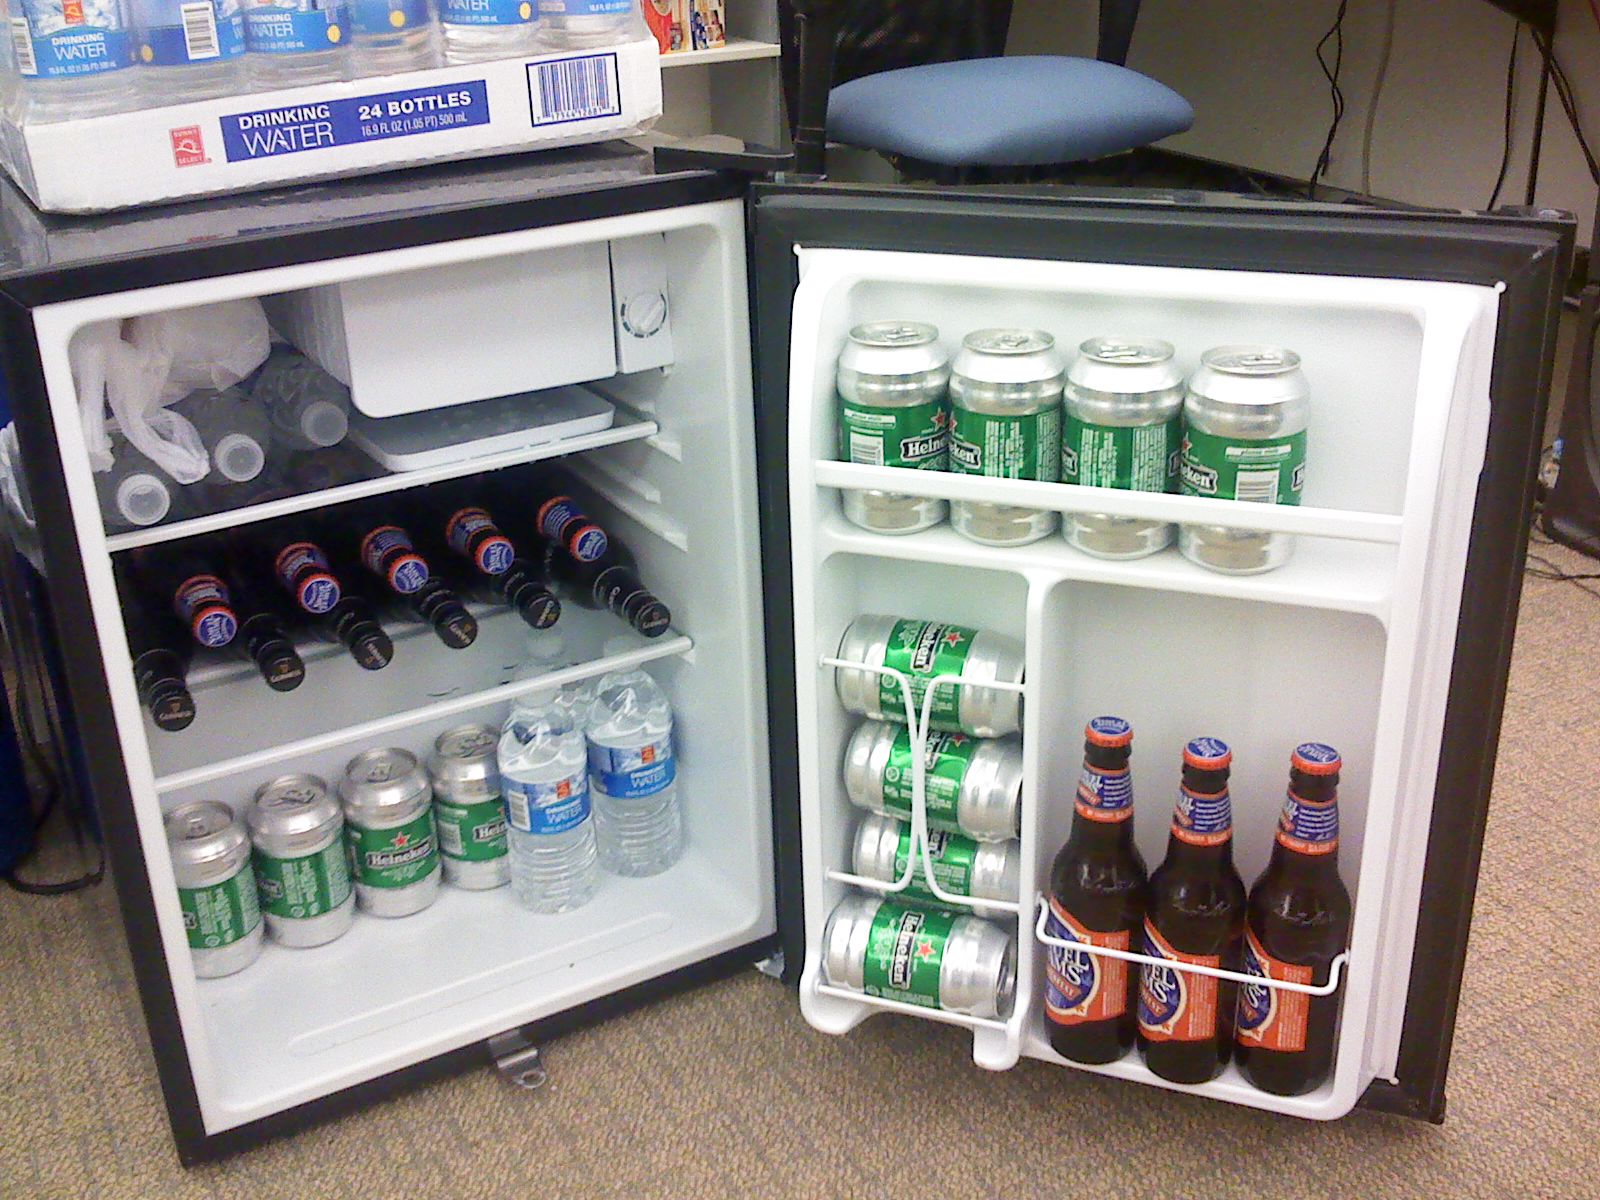 Beer fridge at work